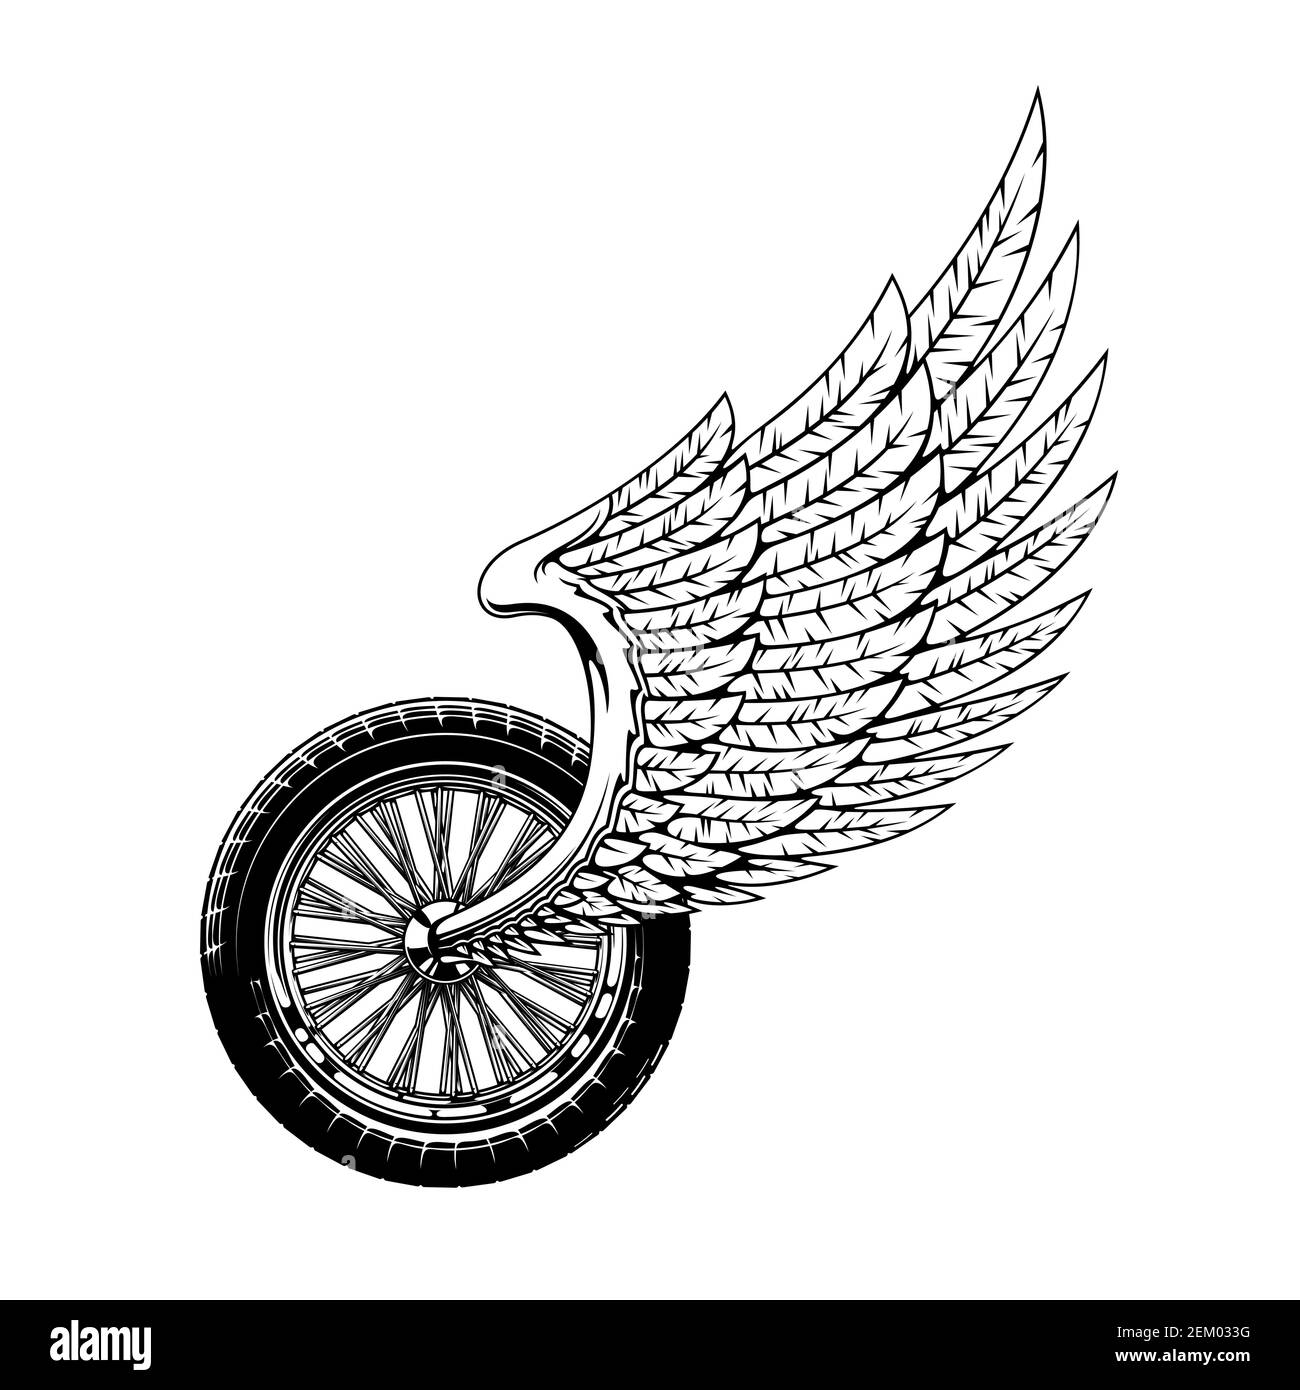 Discover 172+ bike wheel tattoo latest